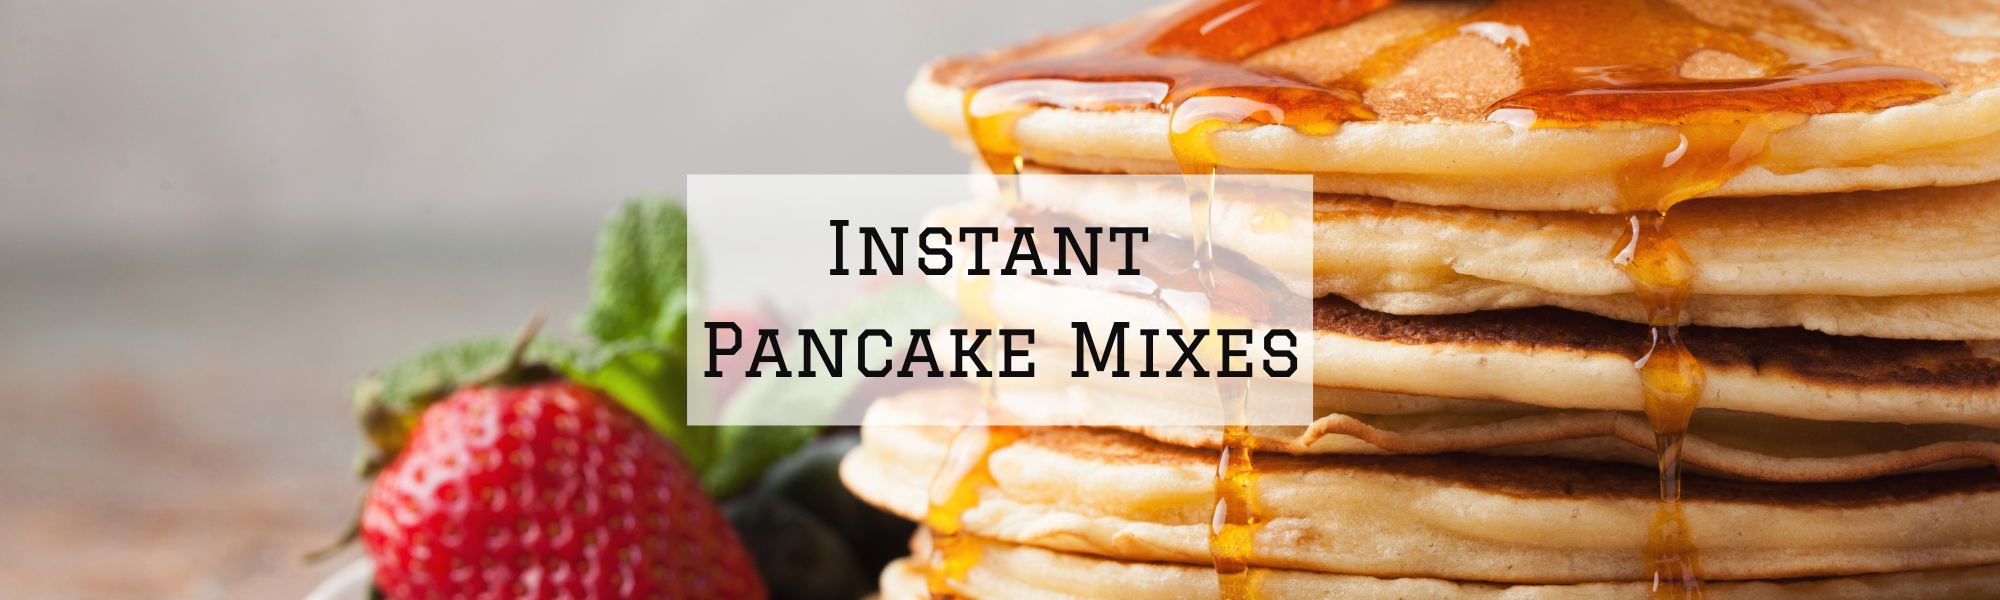 Instant Pancake Mixes